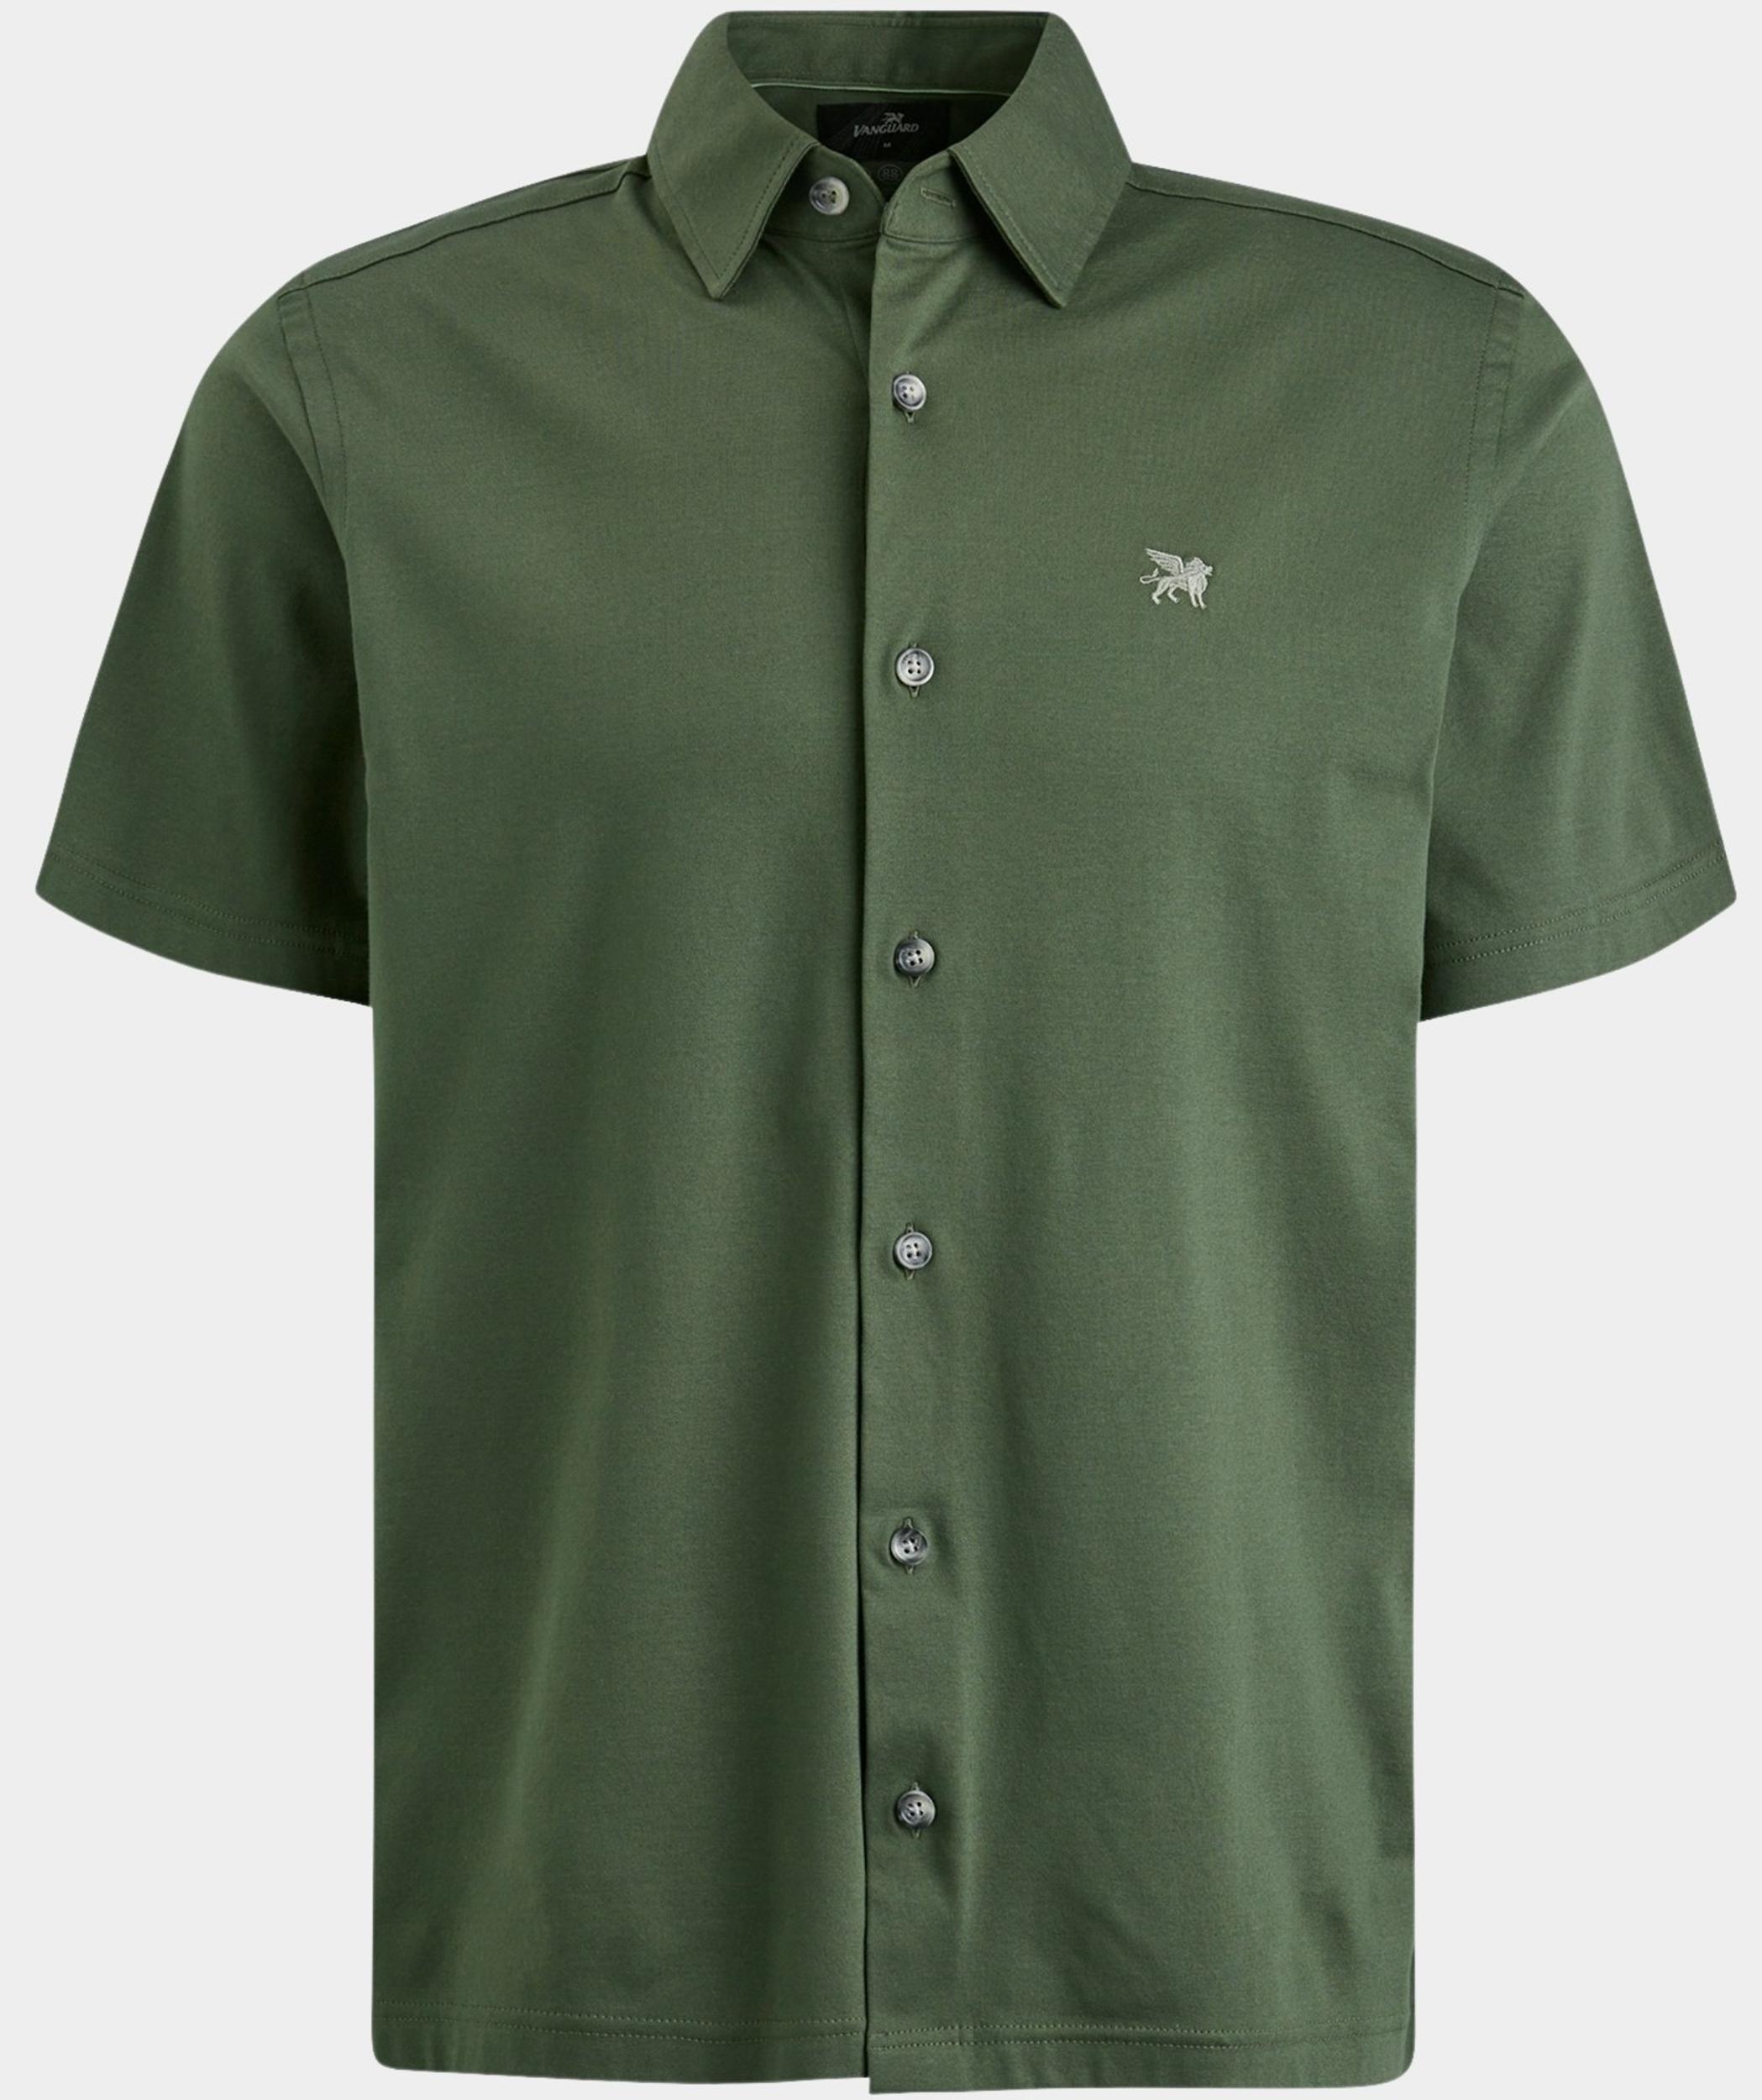 Vanguard Casual hemd korte mouw Groen Short Sleeve Shirt CF Double VSIS2404256/6025